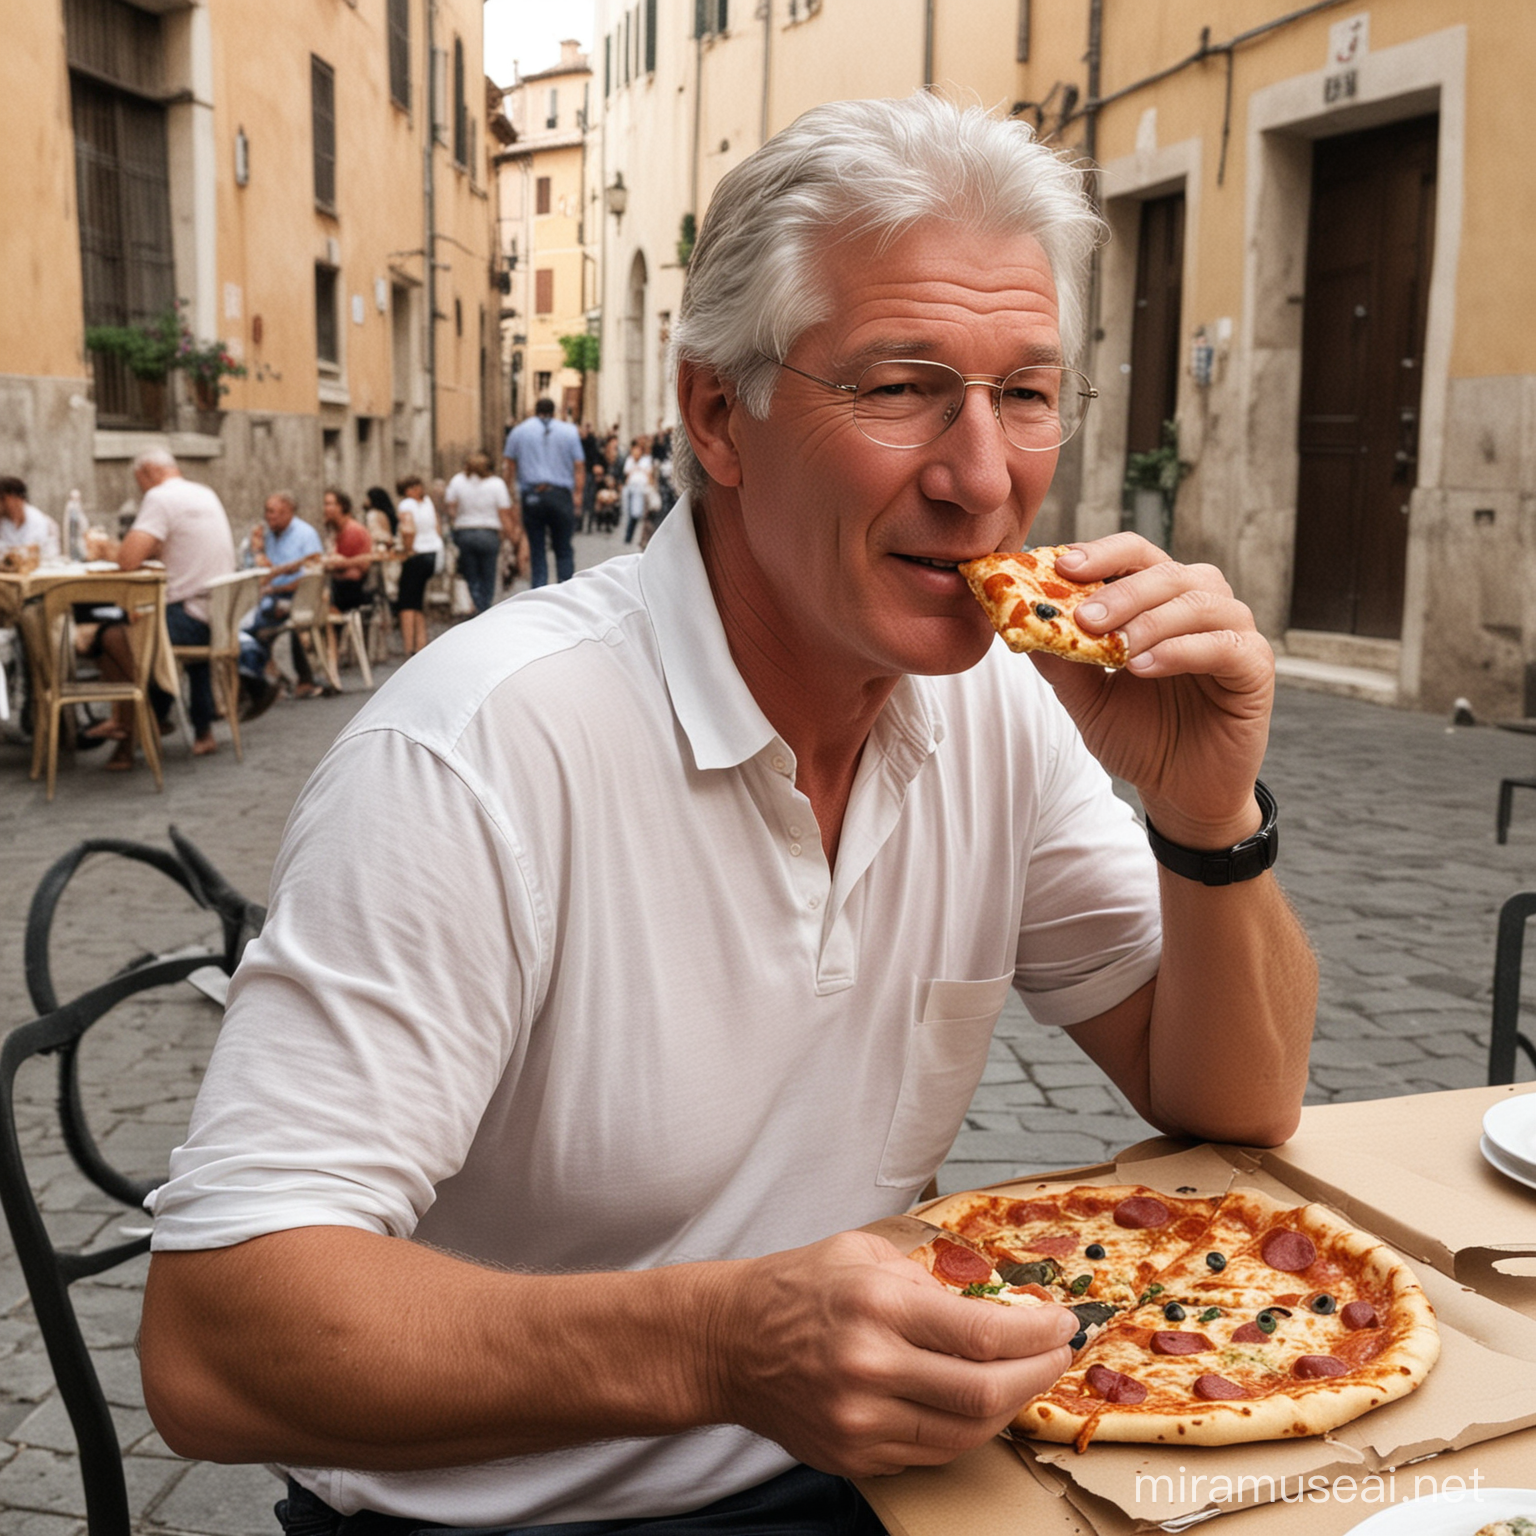 Richard Gere Enjoying Authentic Italian Pizza in Charming Italian Cafe